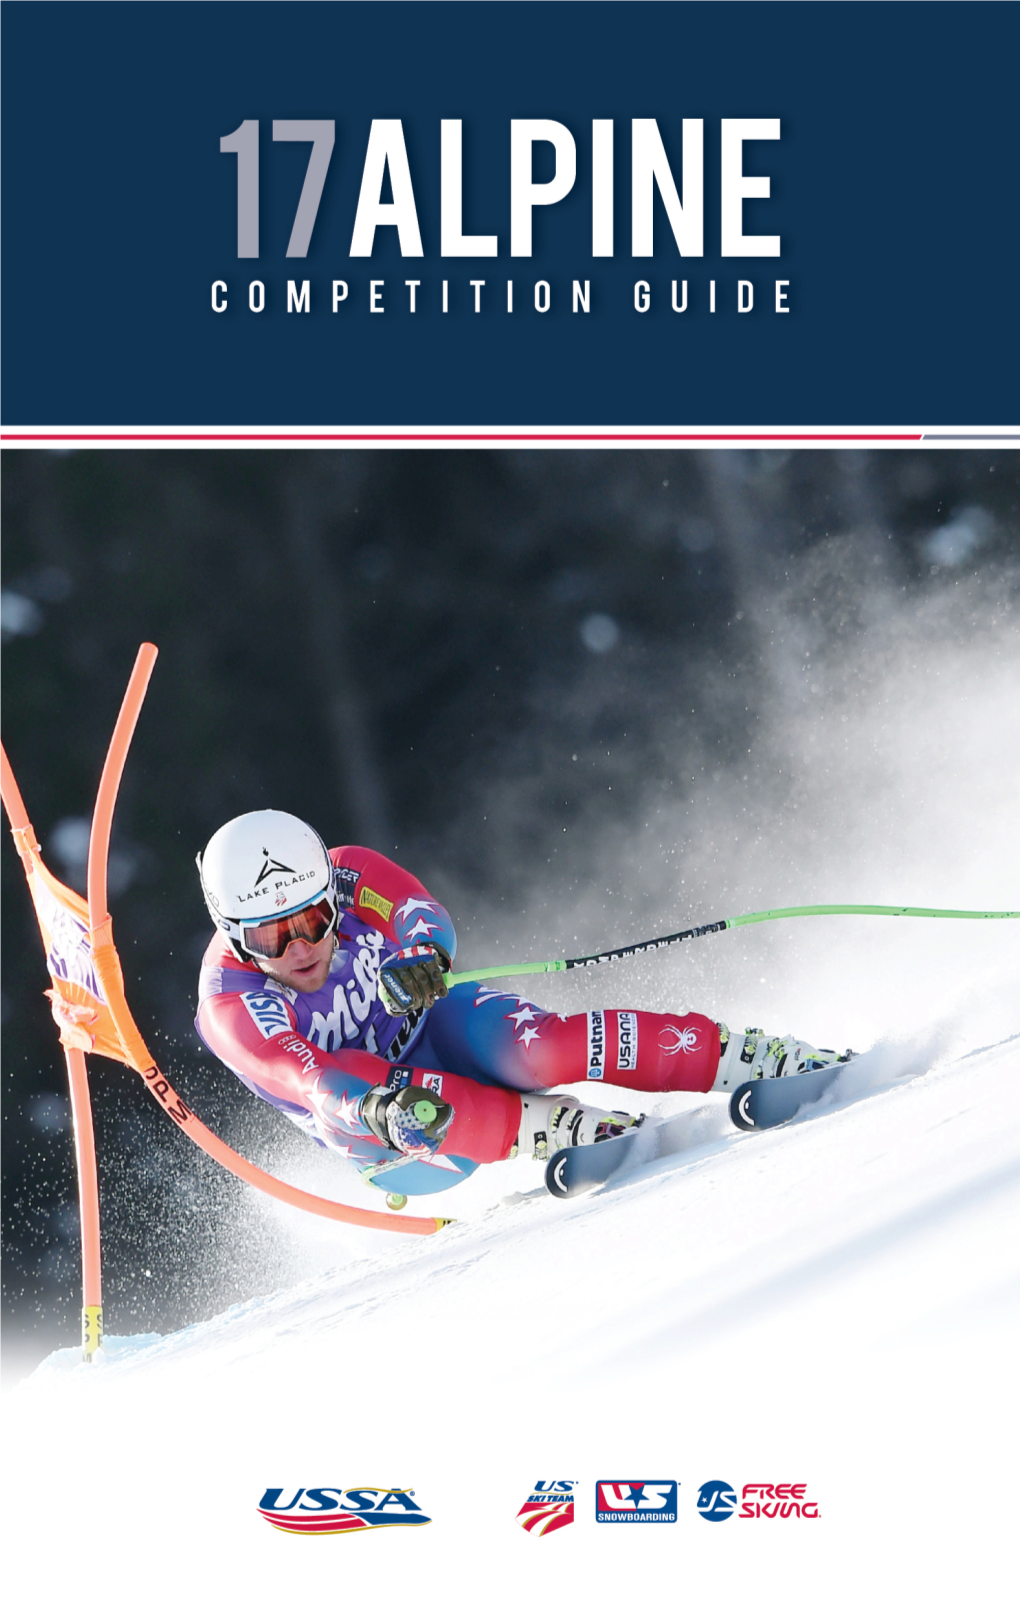 2017 Ussa Alpine Competition Guide